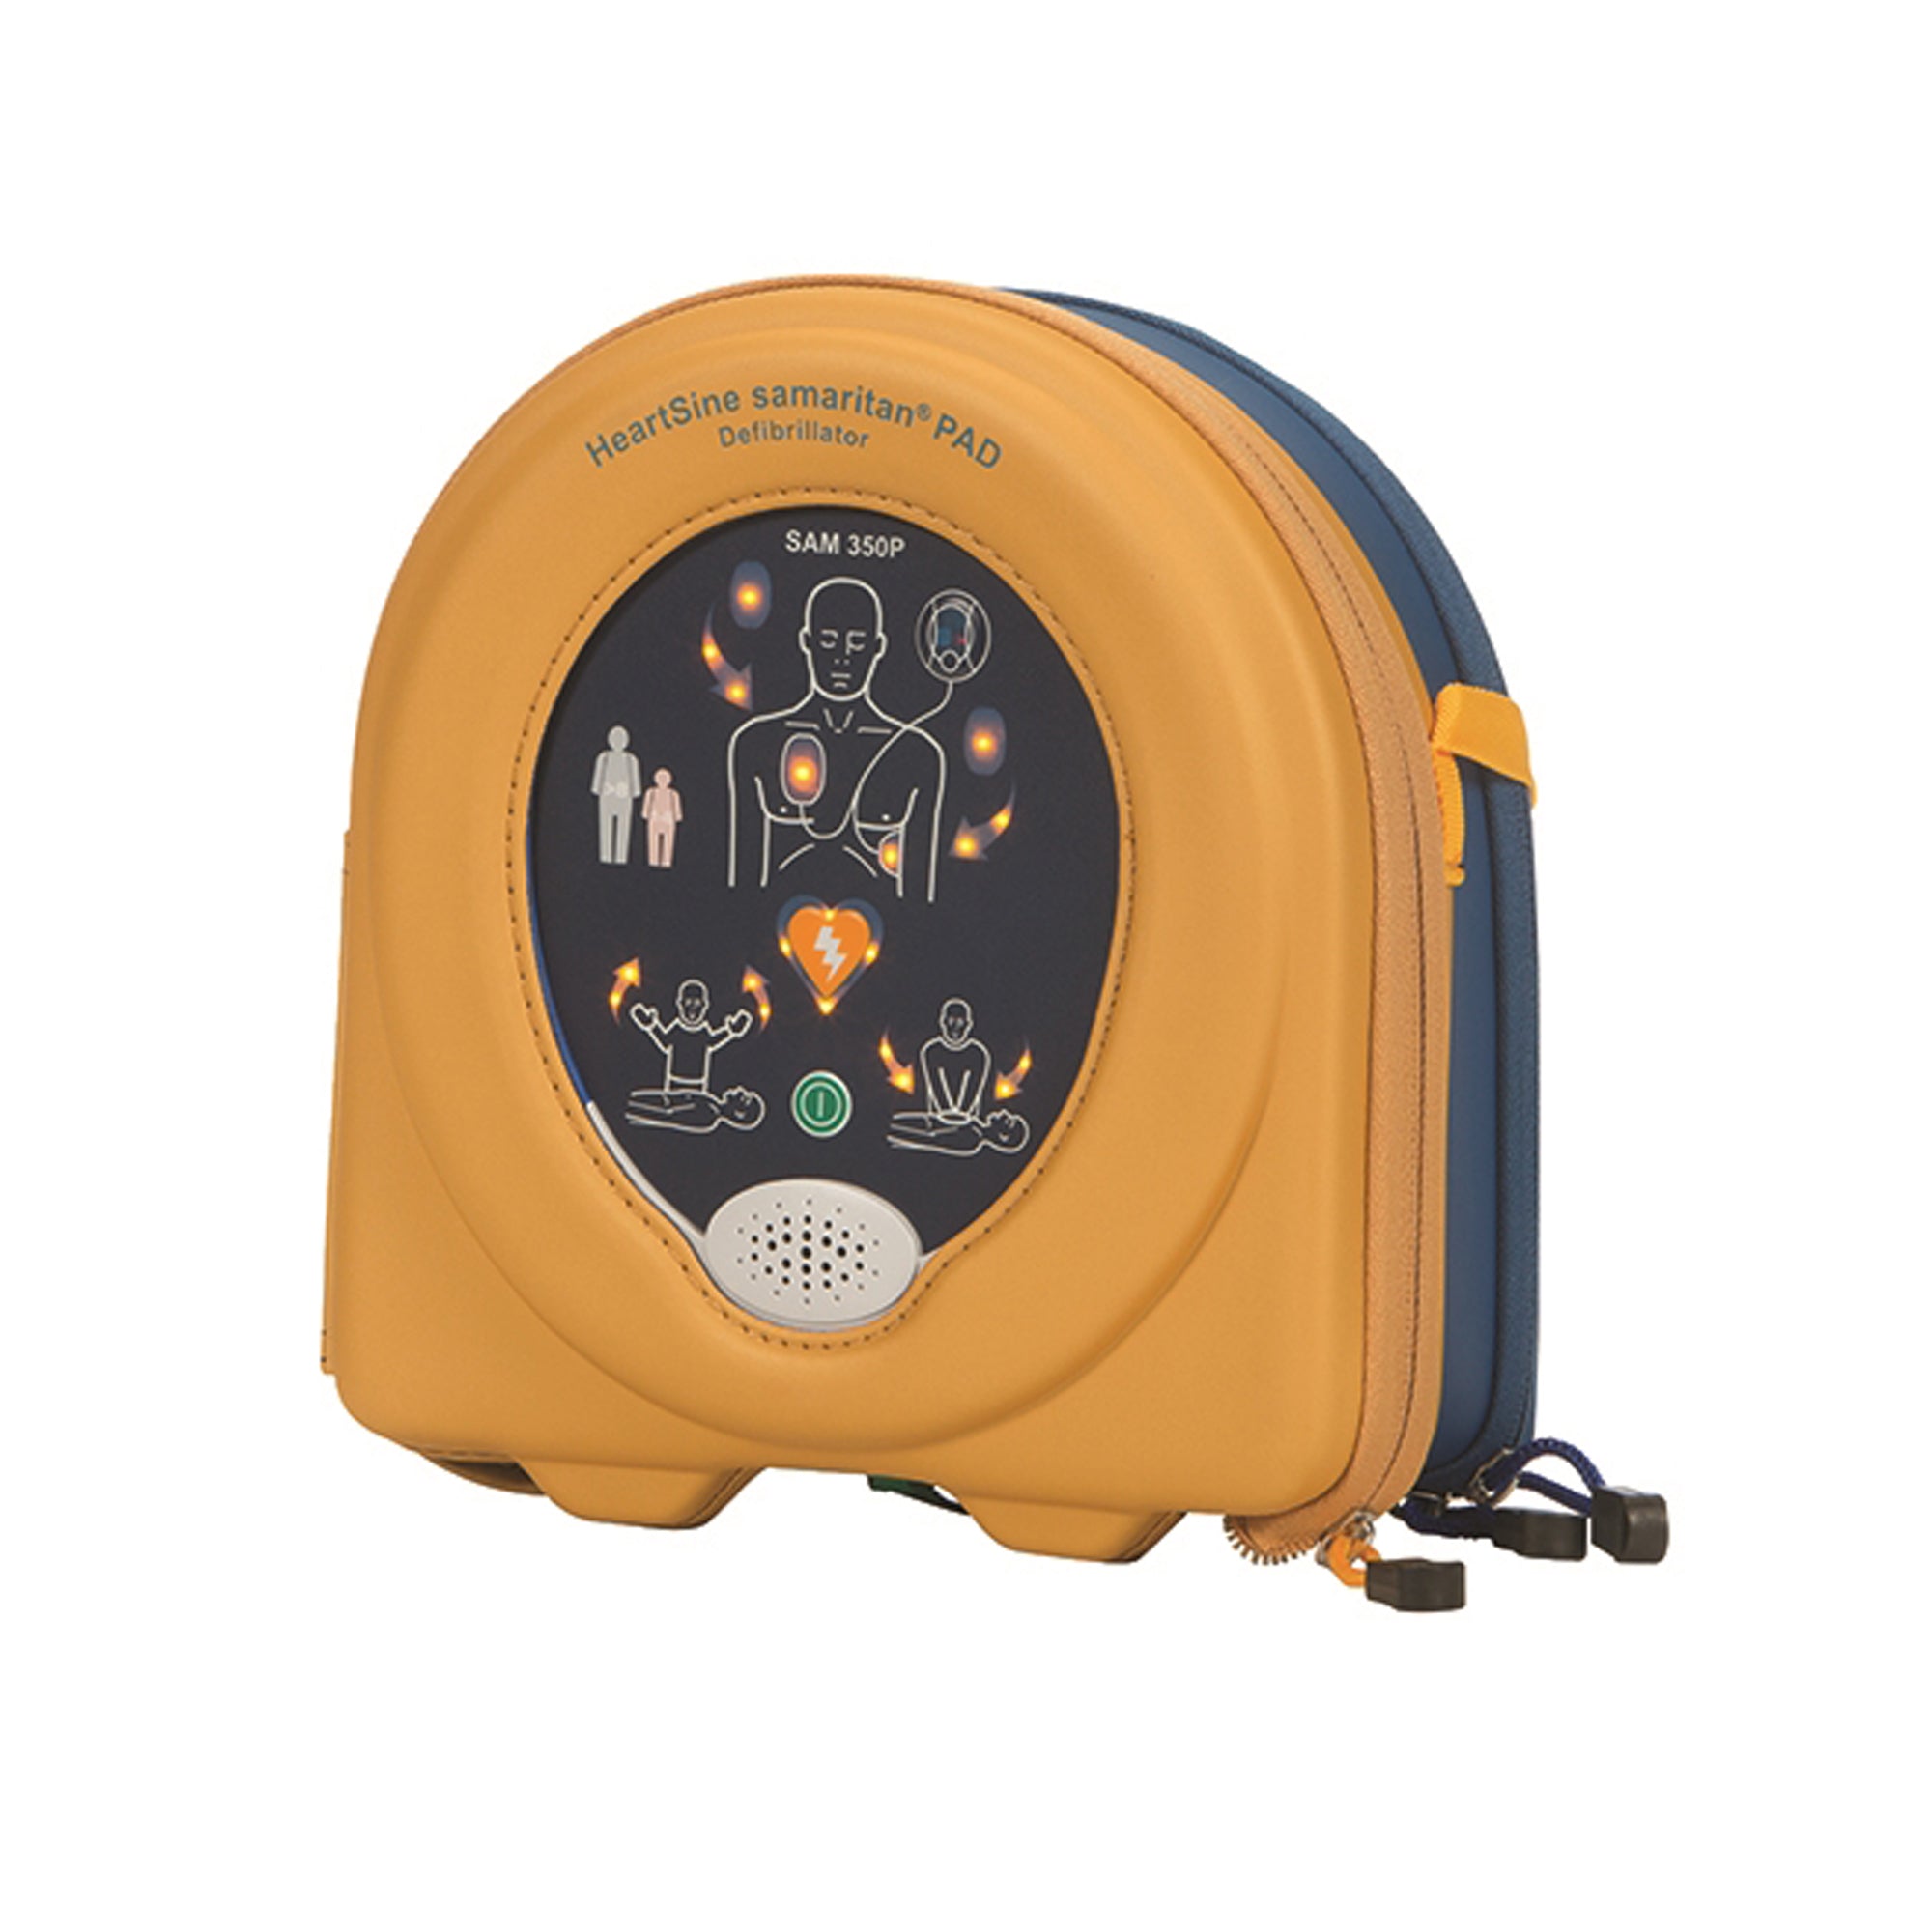 pvs-defibrillatore-samaritan-pad-350p-semiautomatico